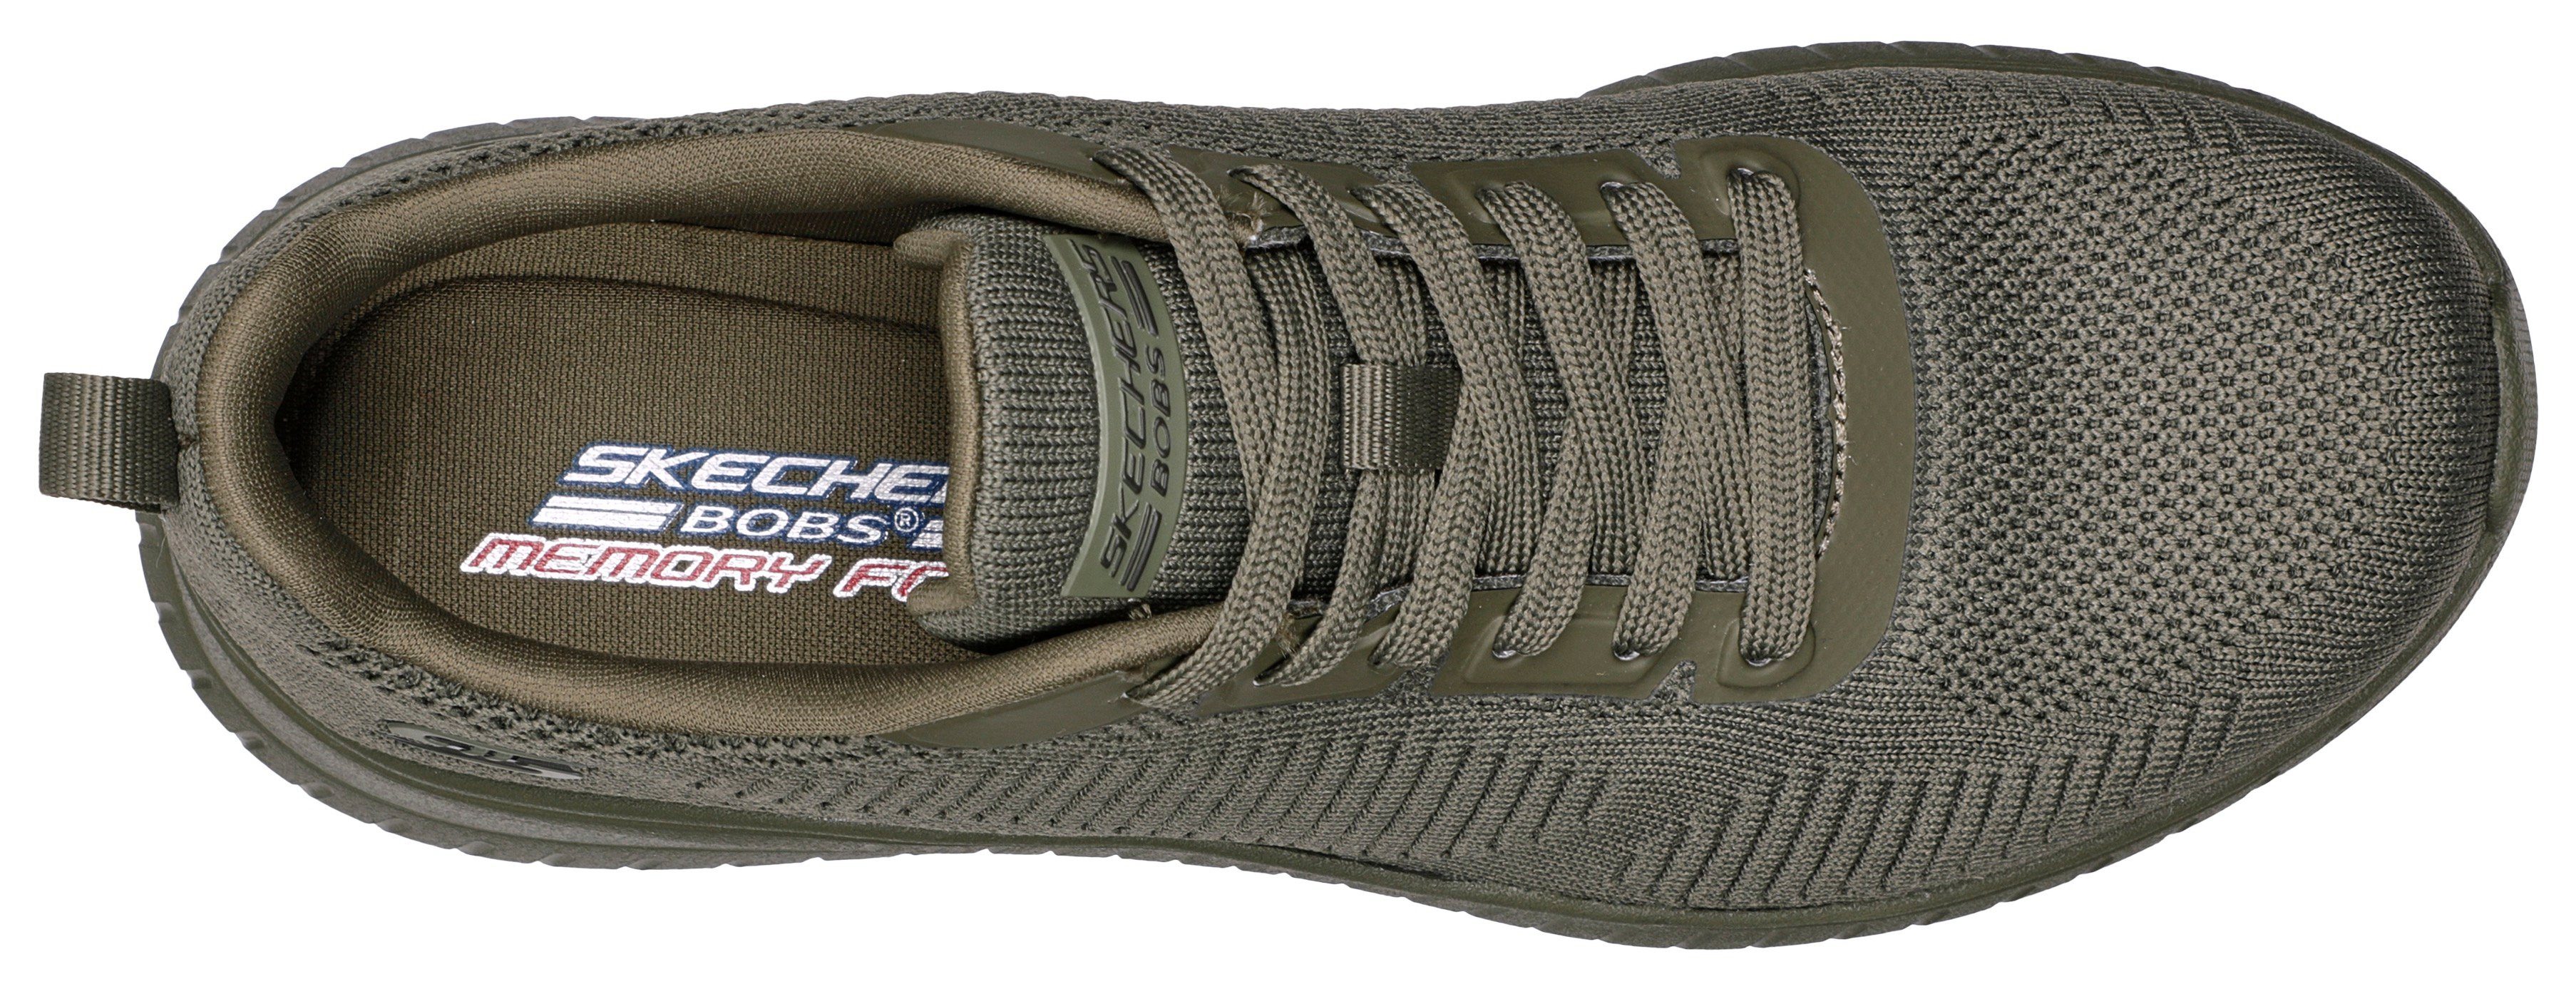 FACE Skechers BOBS SQUAD OFF komfortabler Sneaker mit oliv CHAOS Innensohle